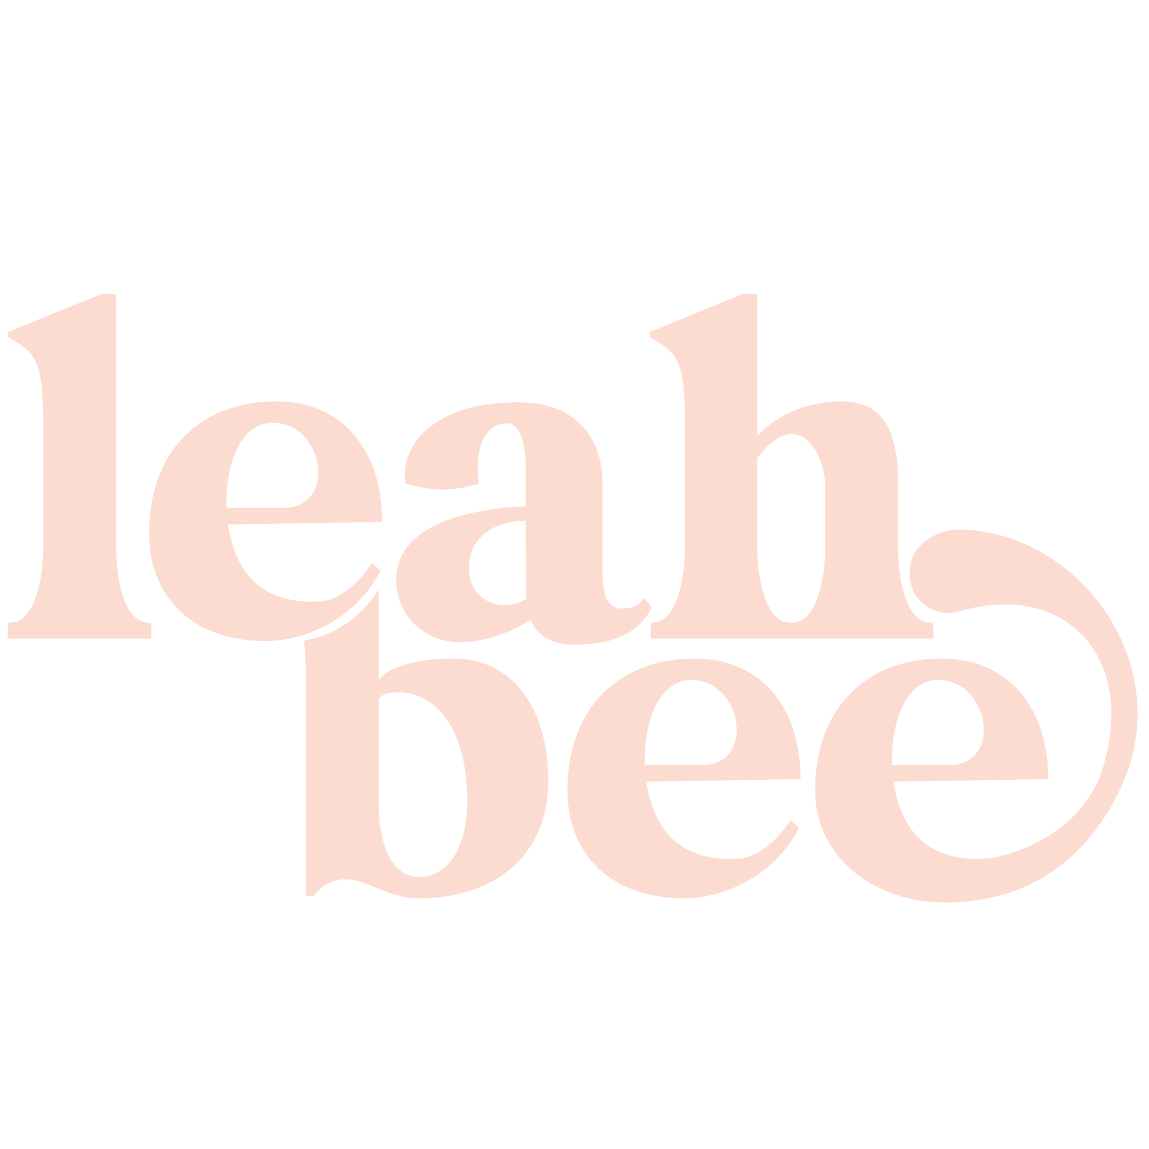 Leah Beecham